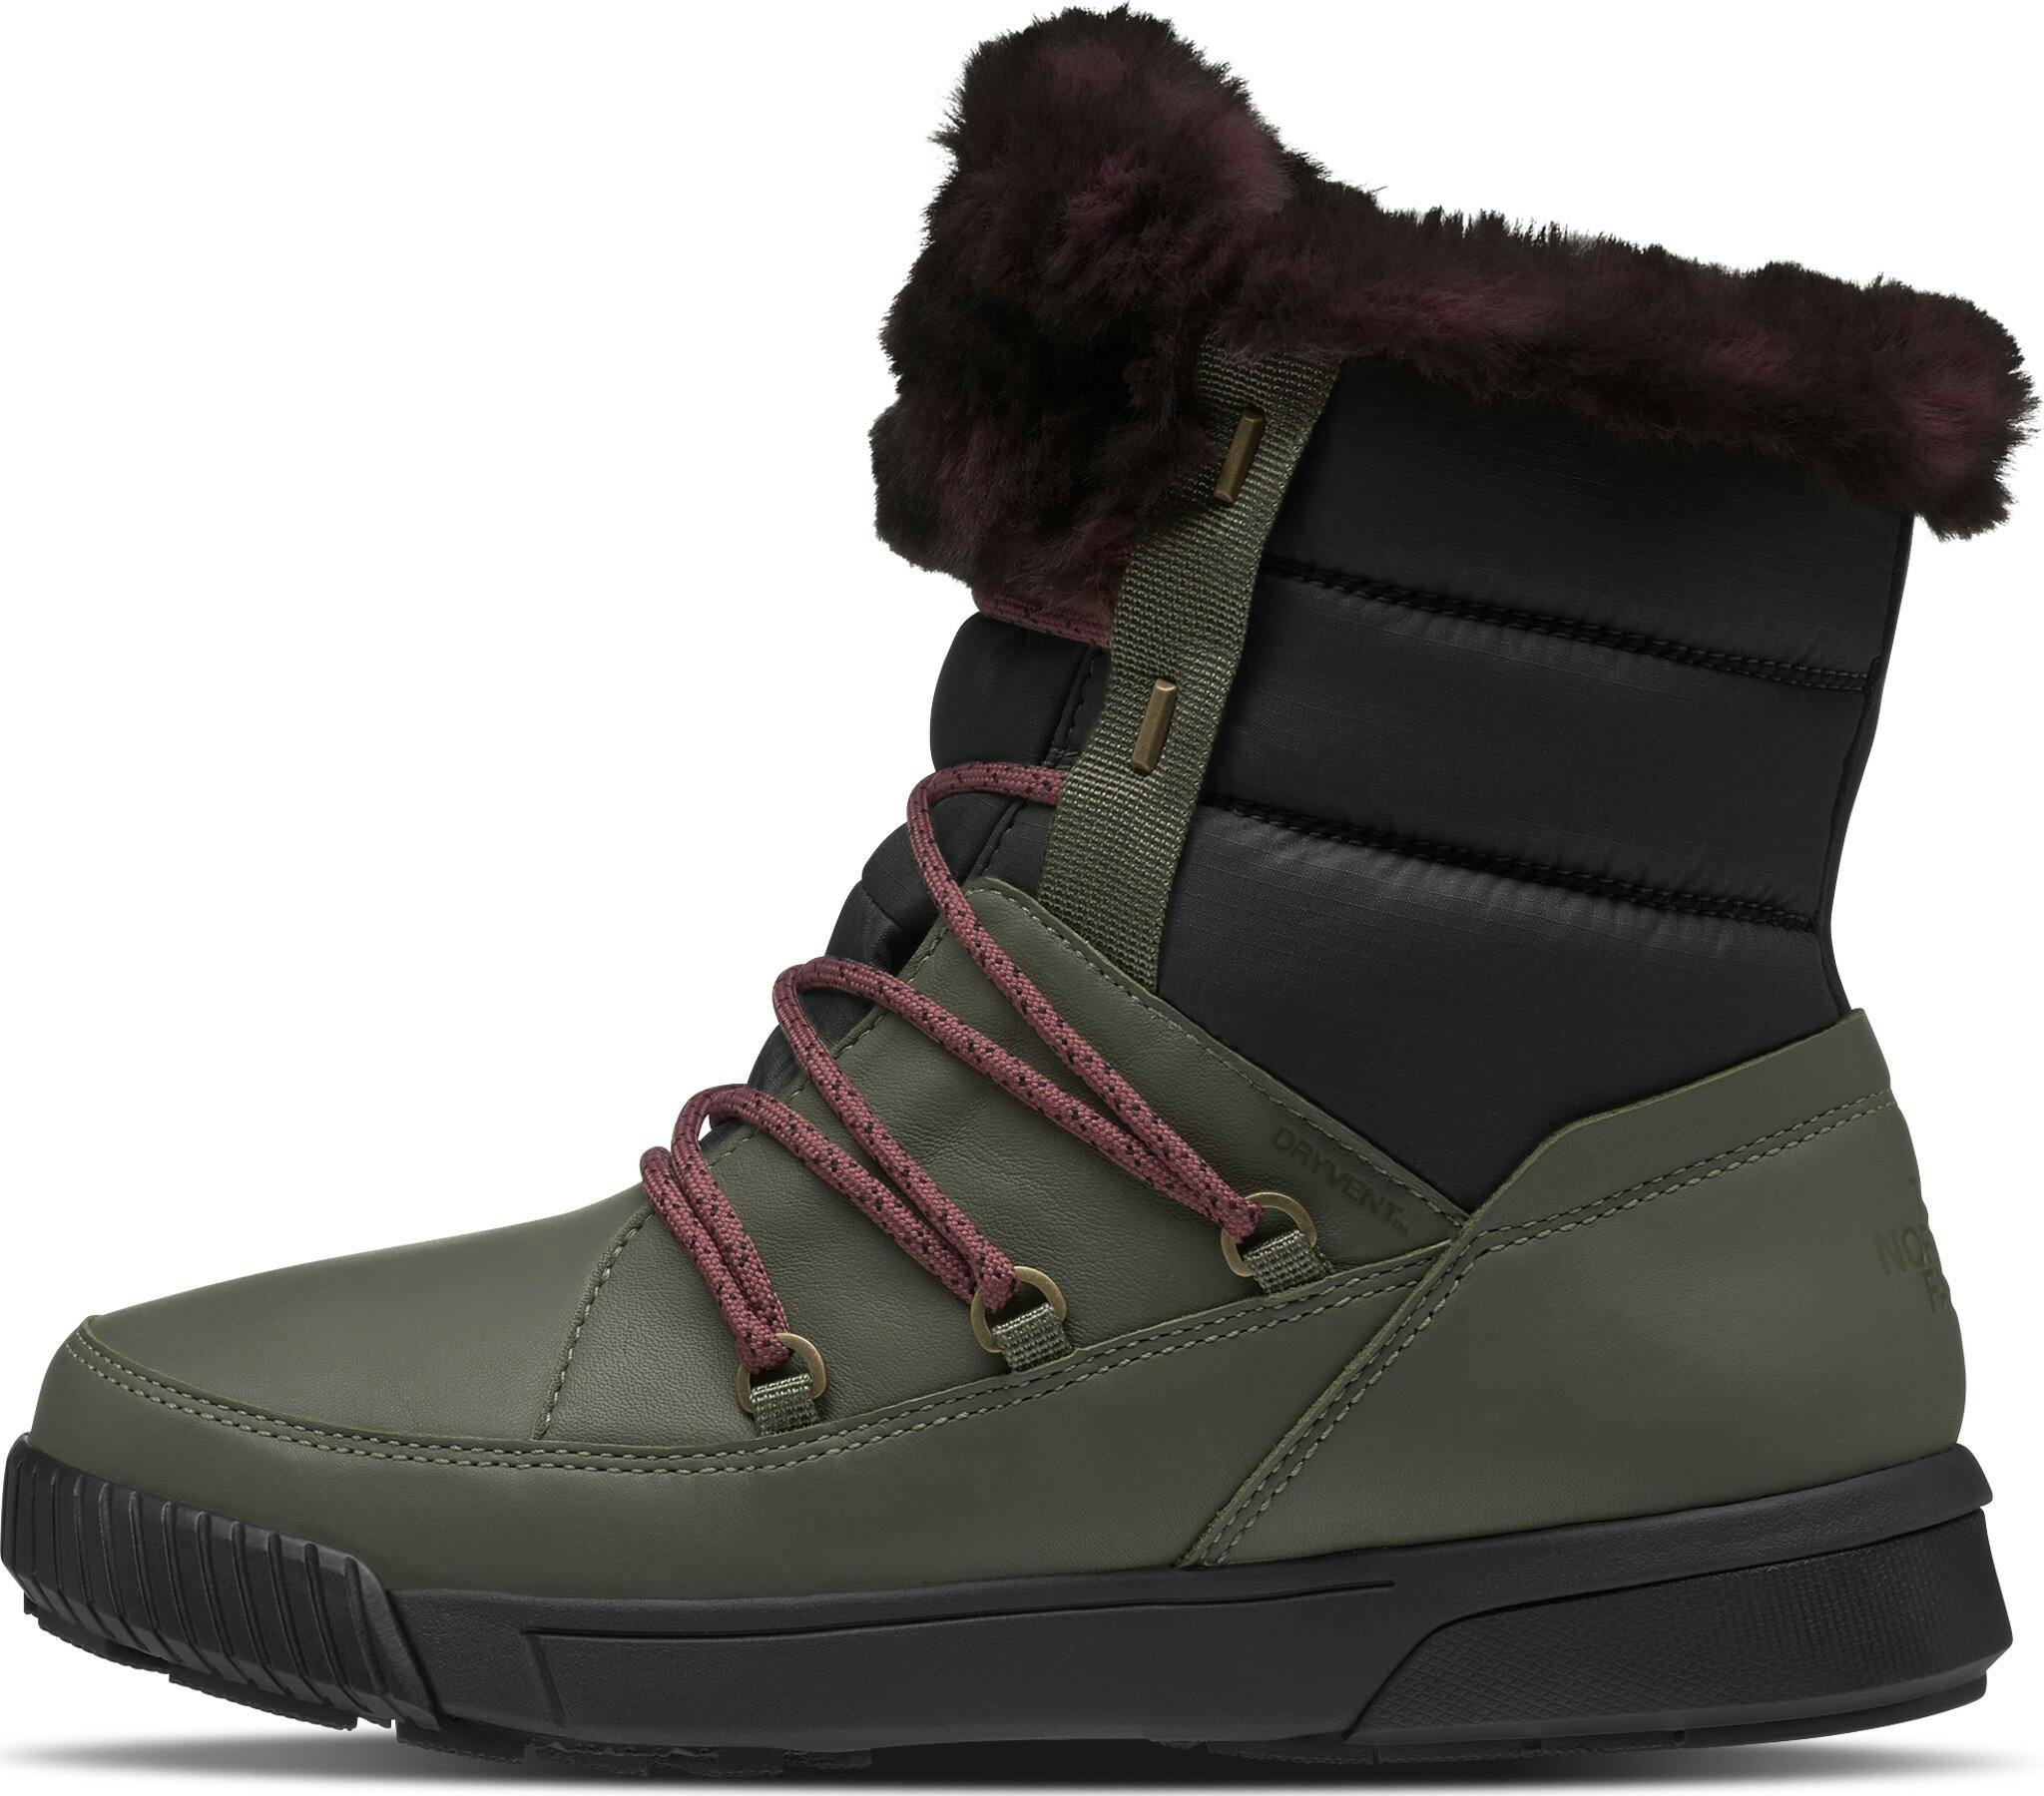 Product image for Sierra Luxe Waterproof Boots - Women's